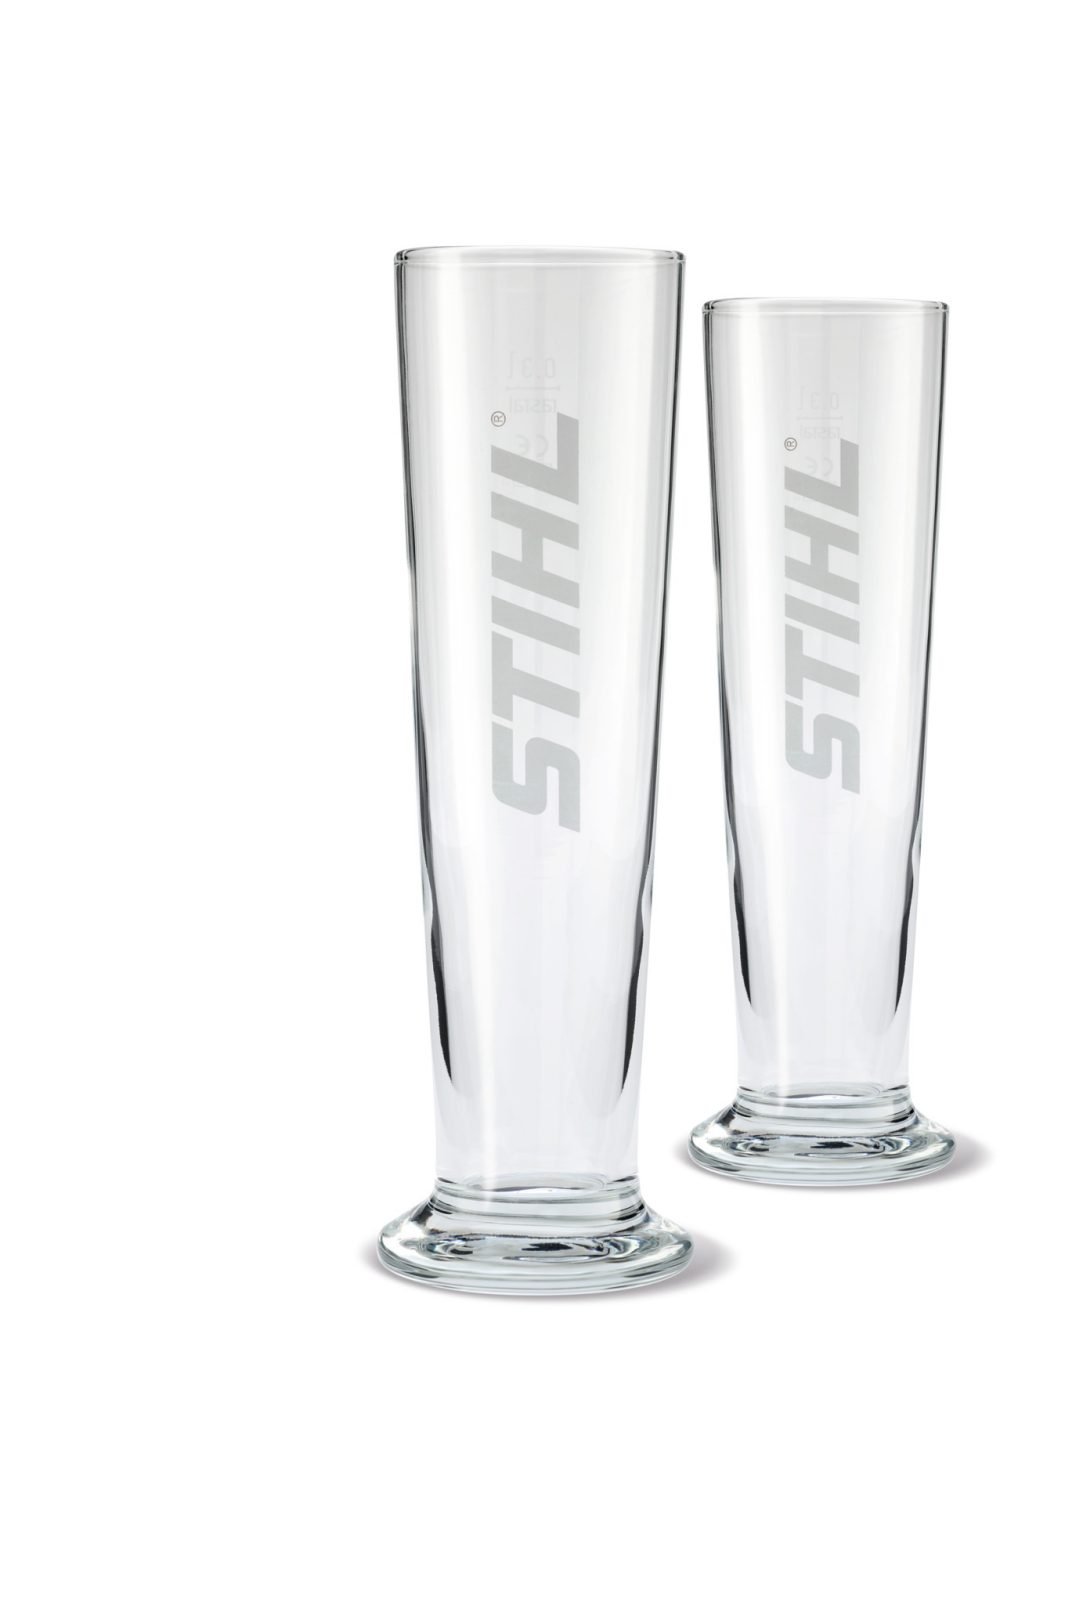 Stihl Beer Glasses - Set